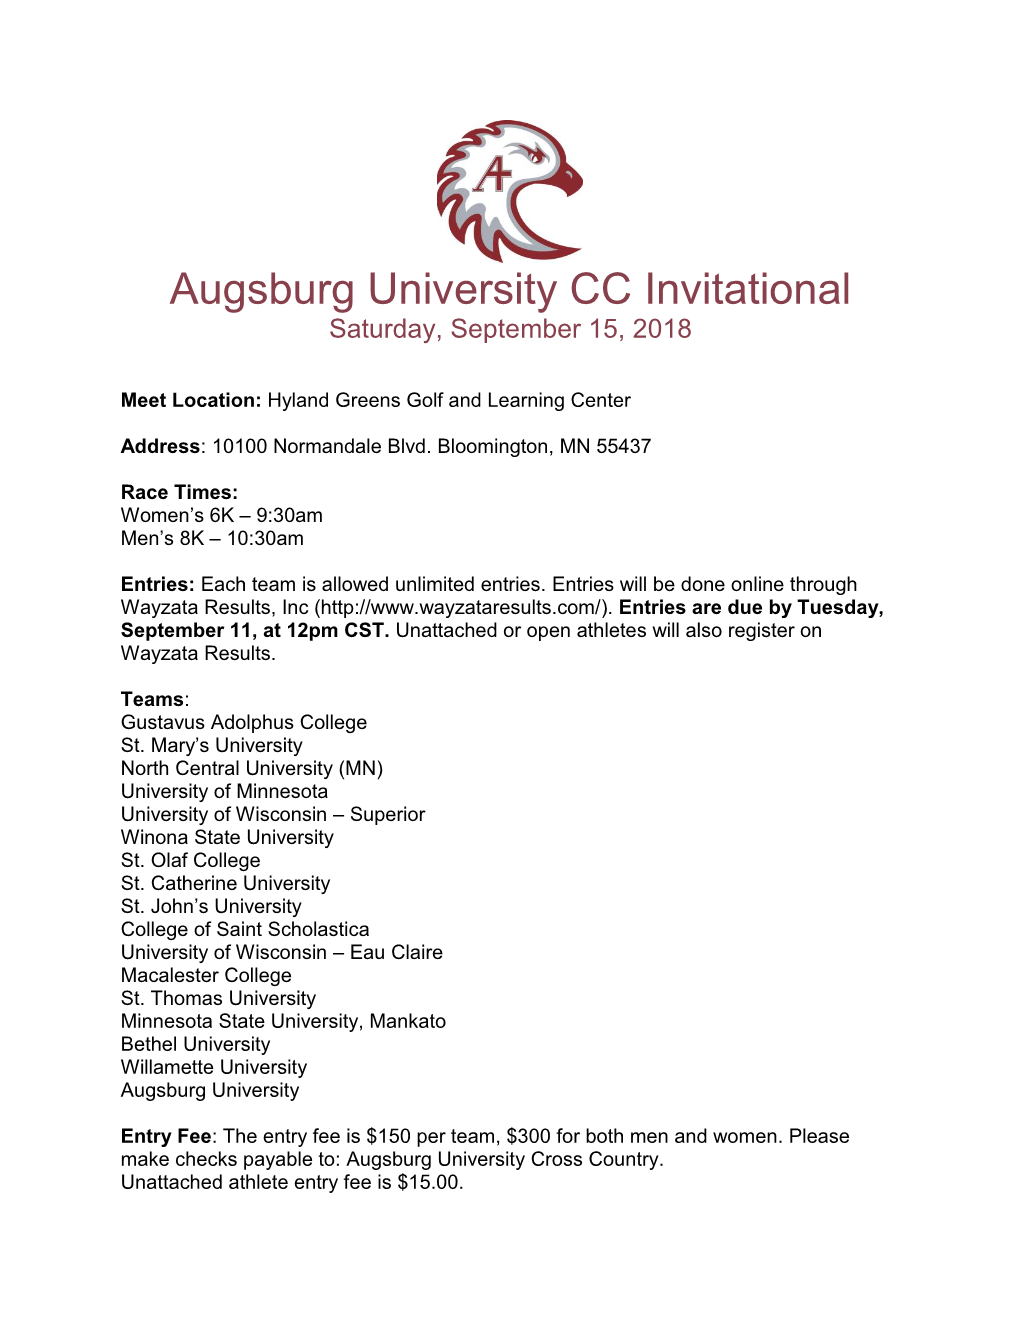 Augsburg University CC Invitational Saturday, September 15, 2018